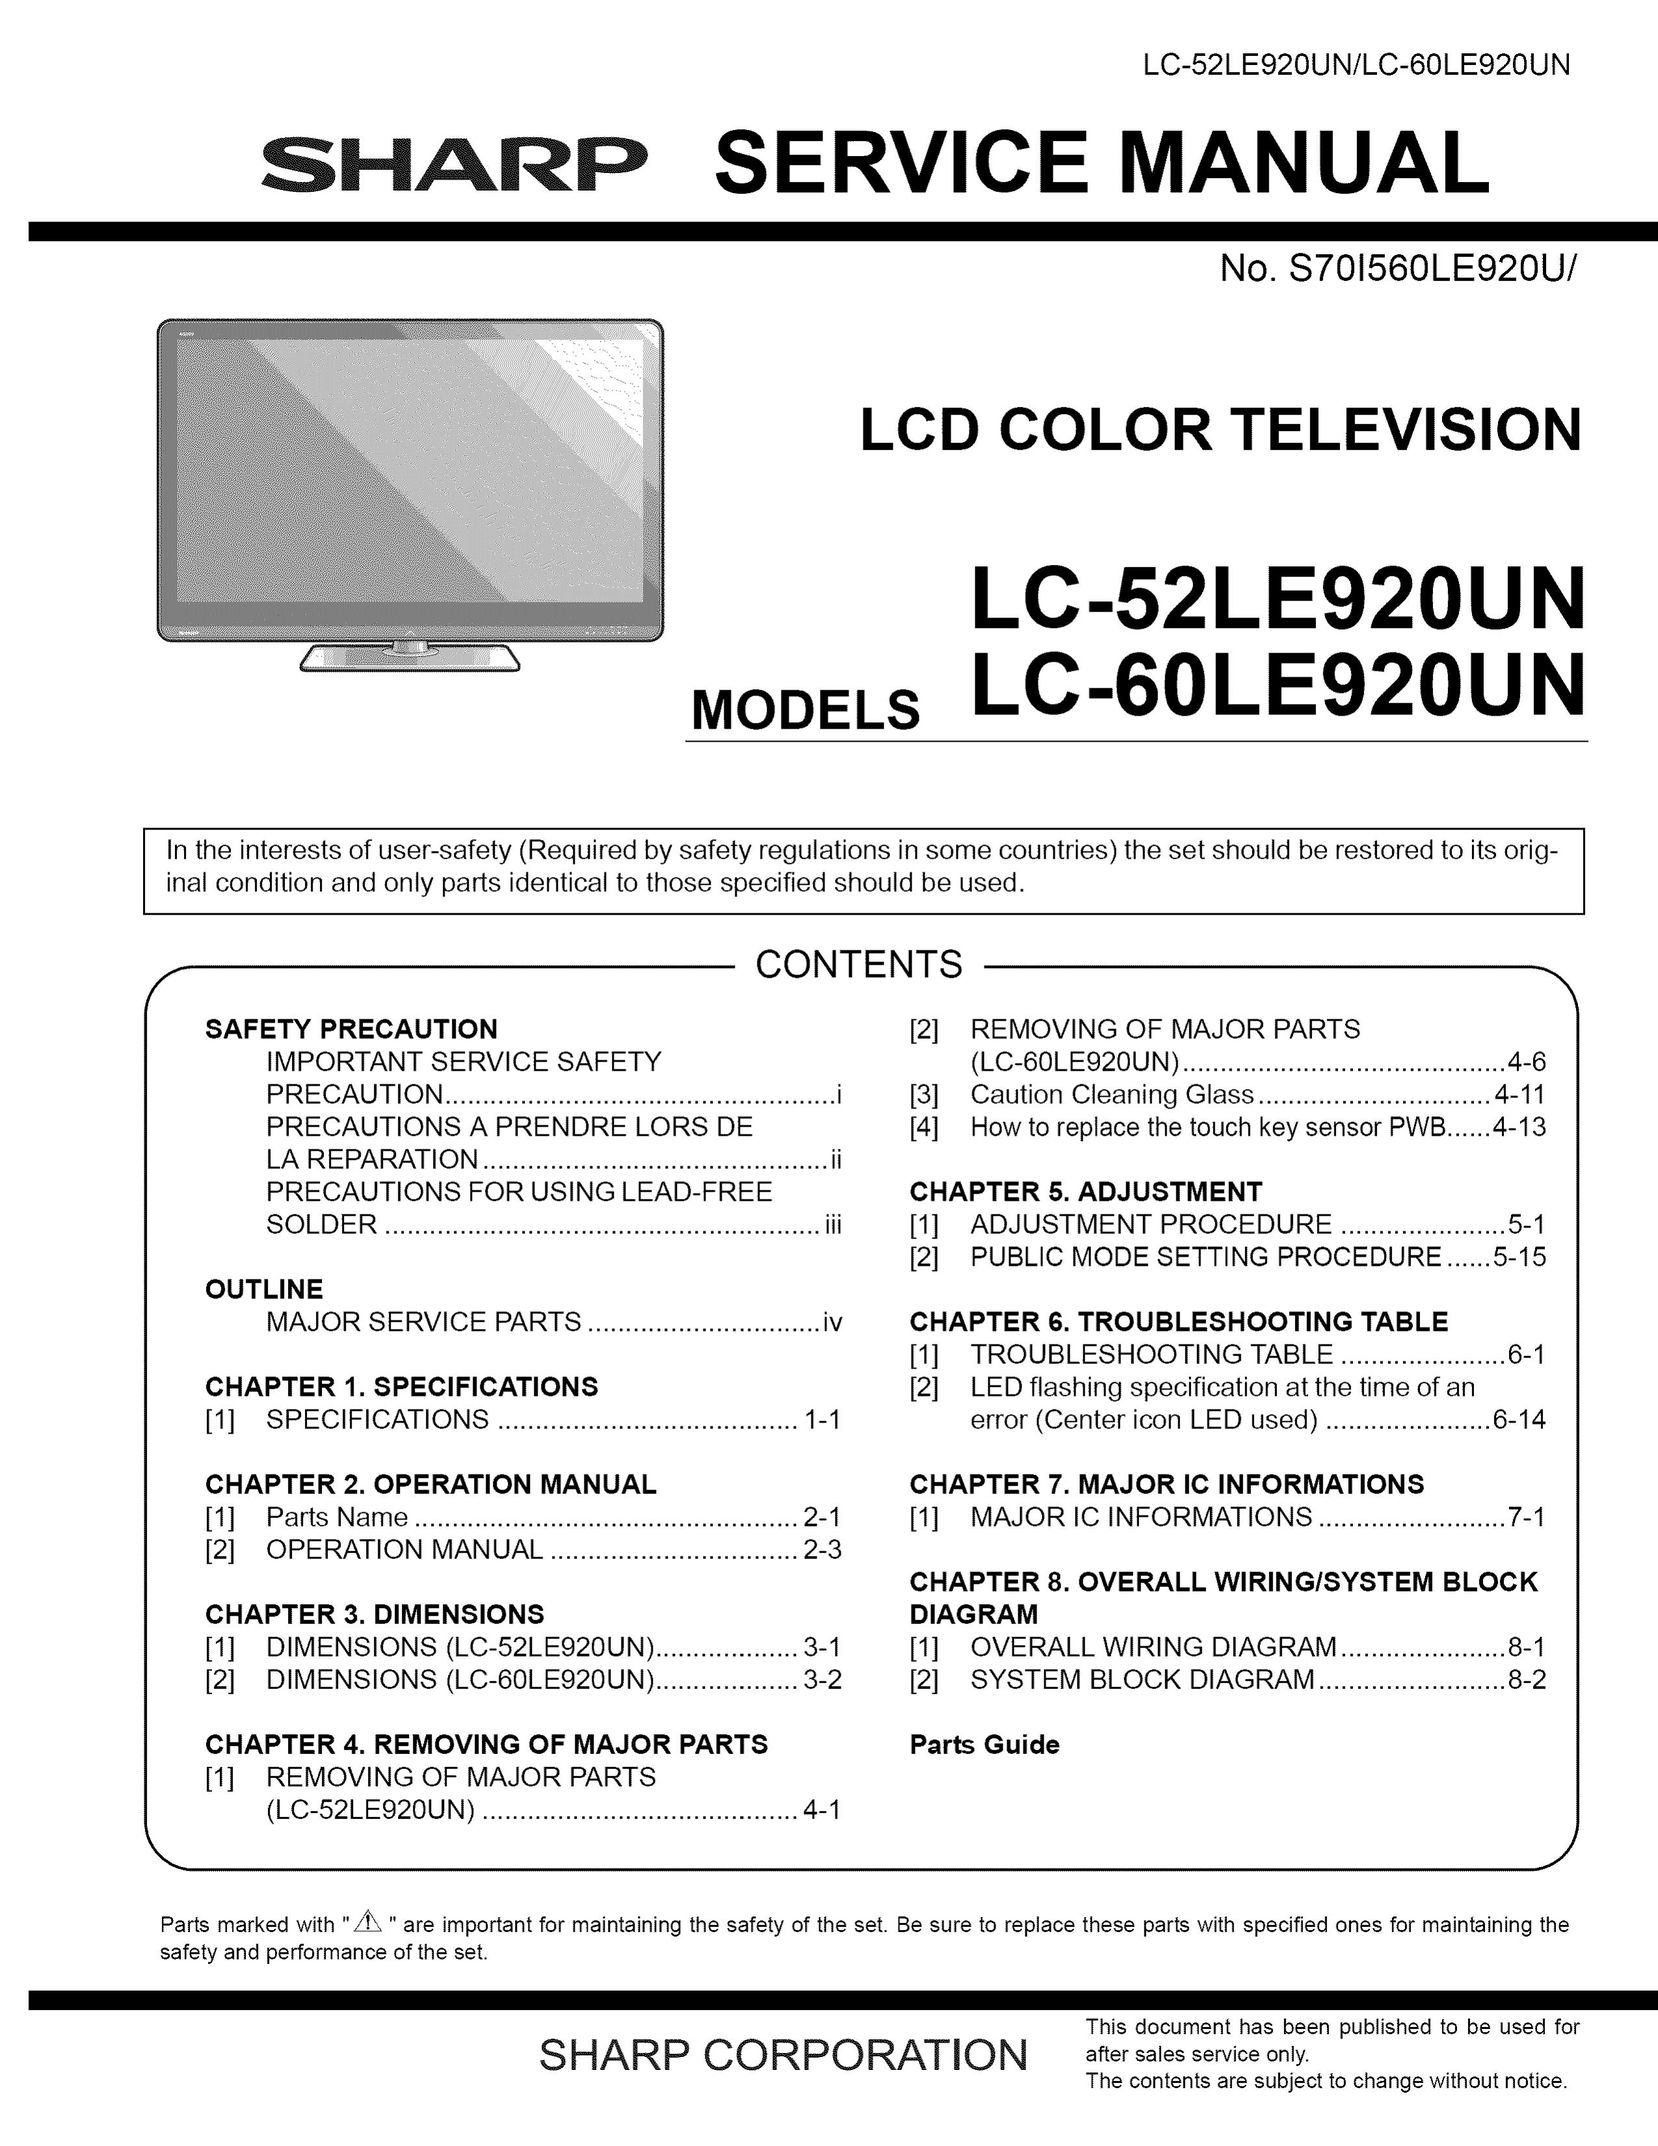 Sharp 60LE920UN Flat Panel Television User Manual